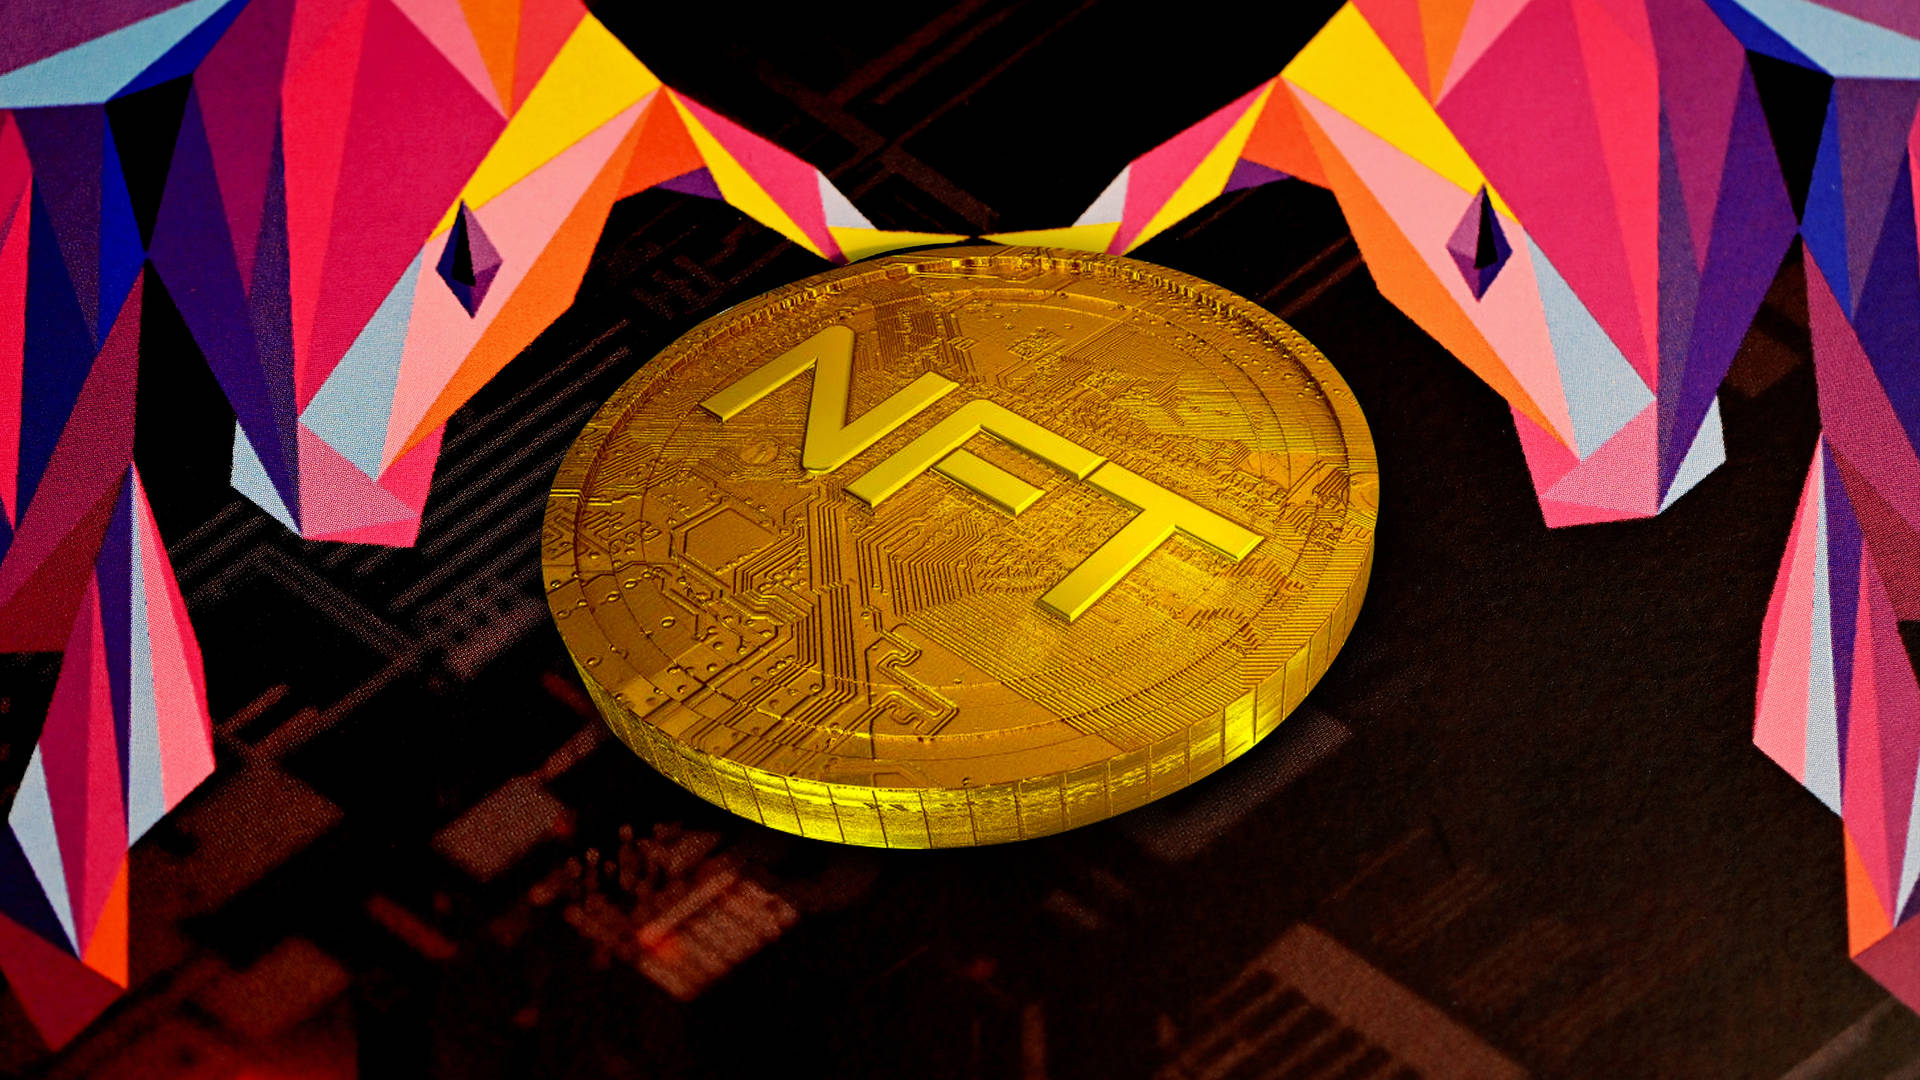 Nft Gold Coin Digital Art Background